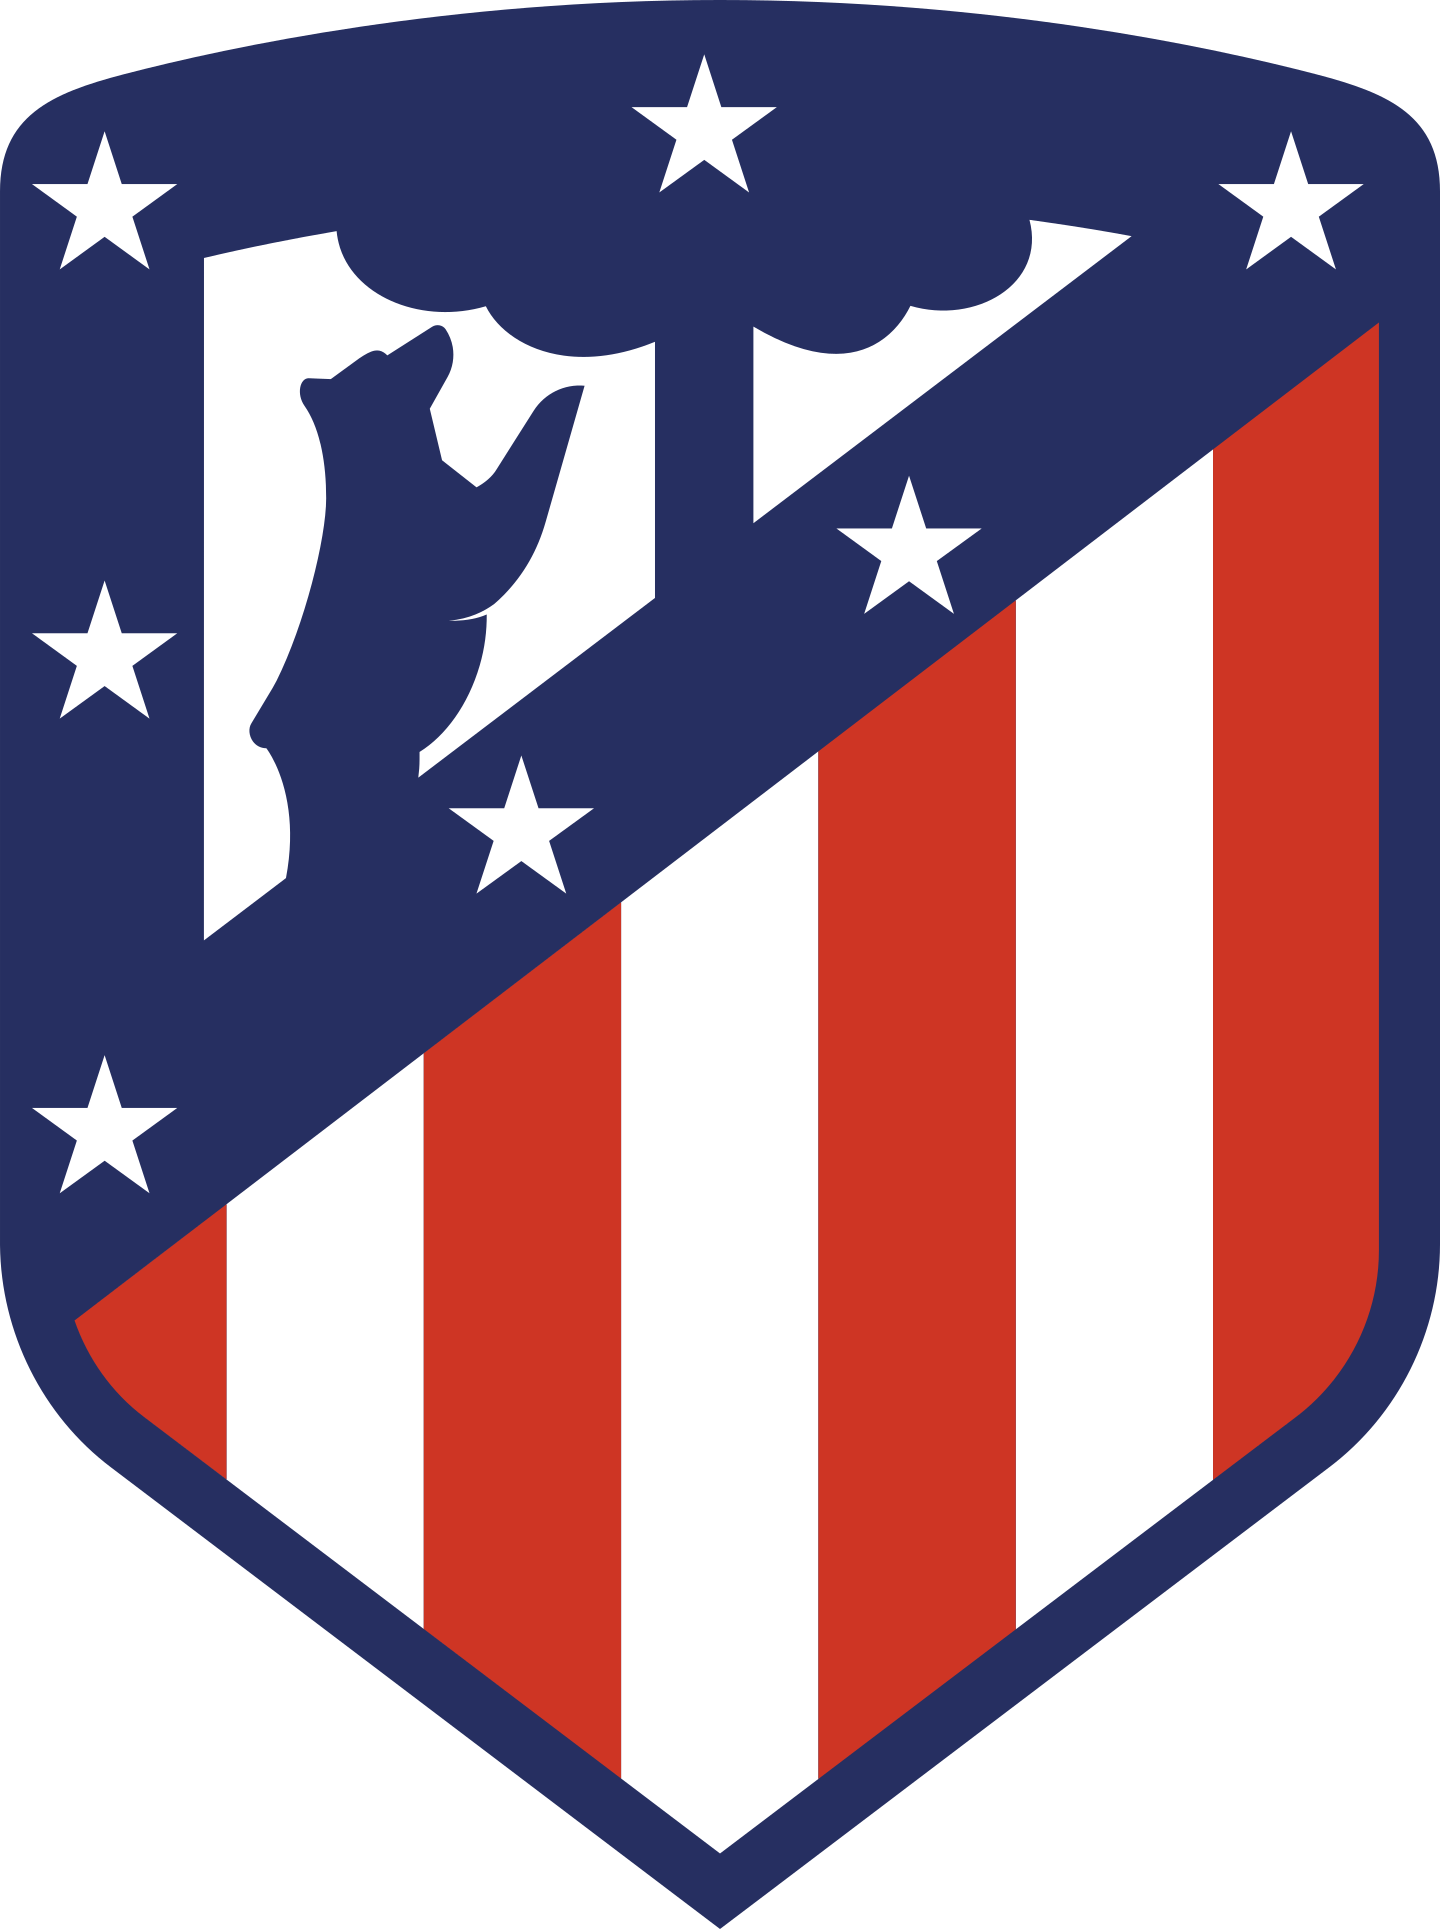 atletico madrid logo 2 1 - Atlético de Madrid Logo